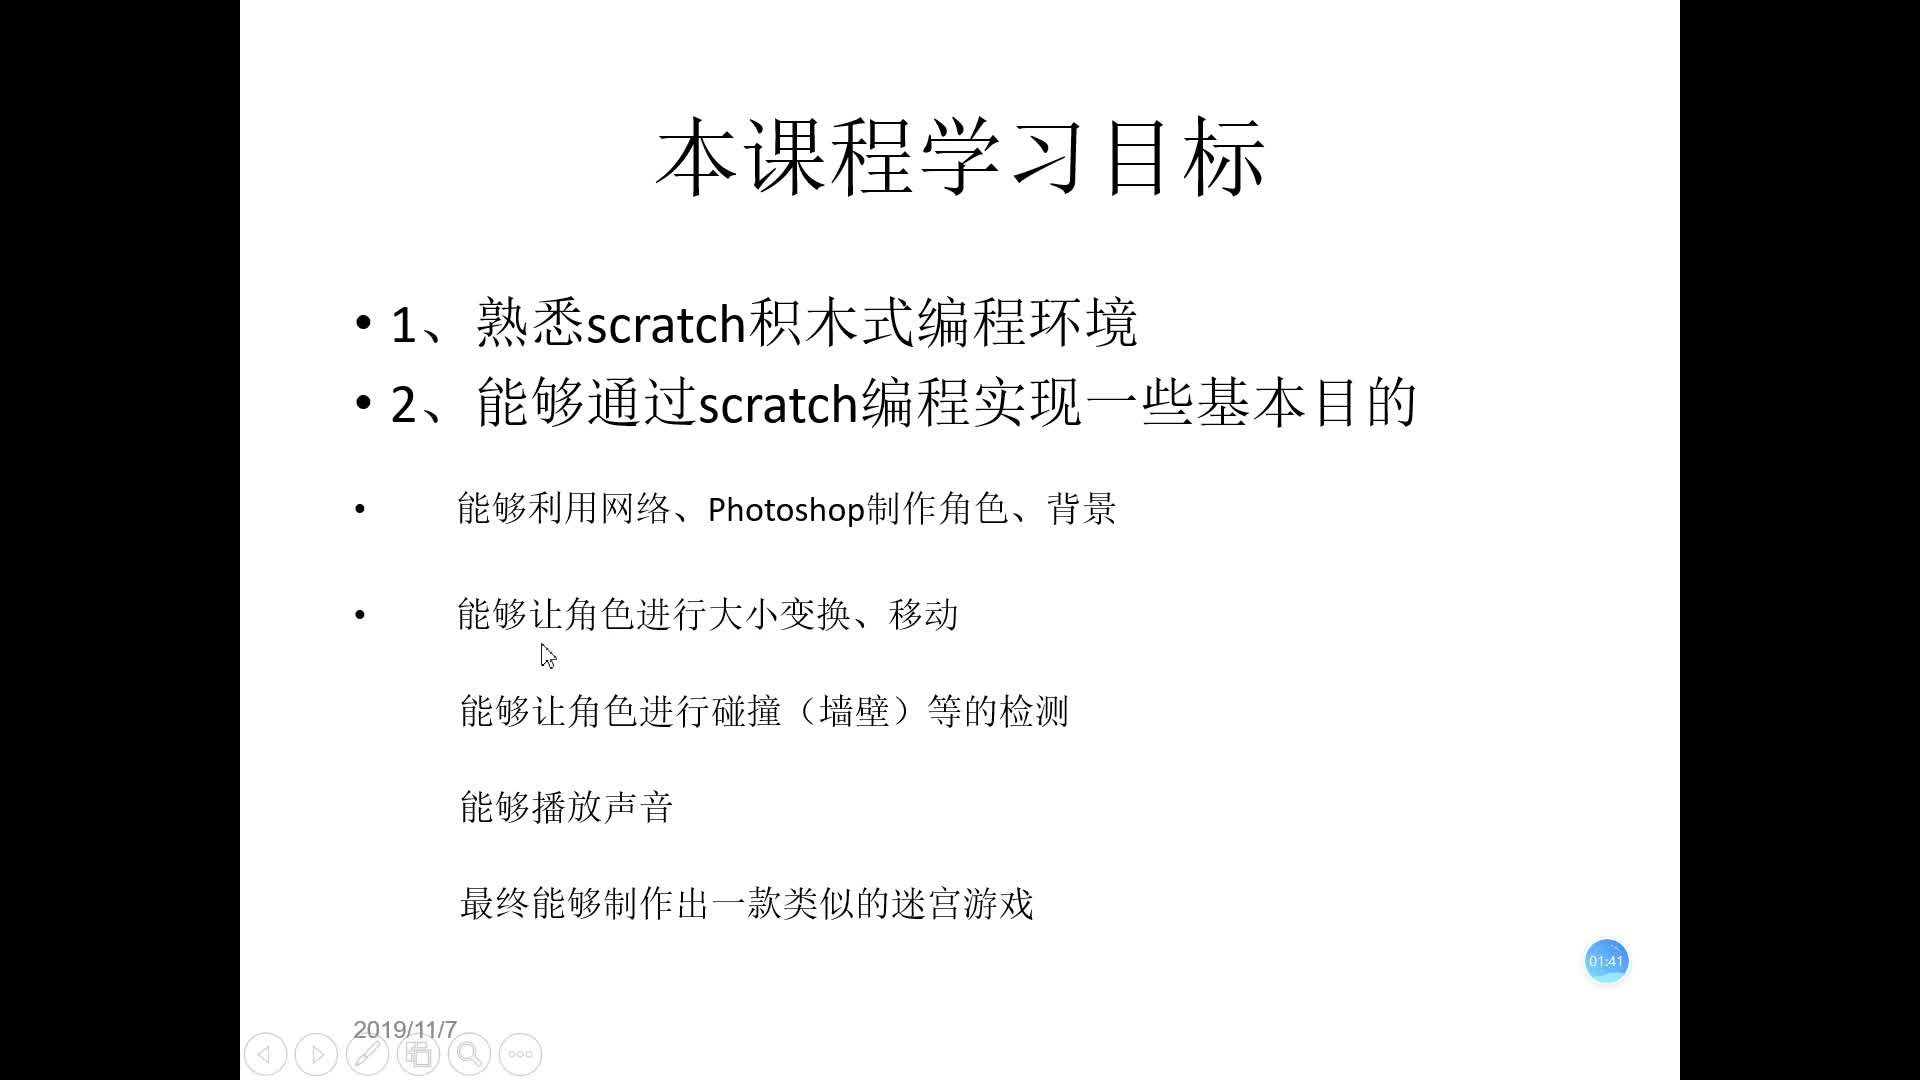 Scratch少儿编程——迷宫游戏项目学习